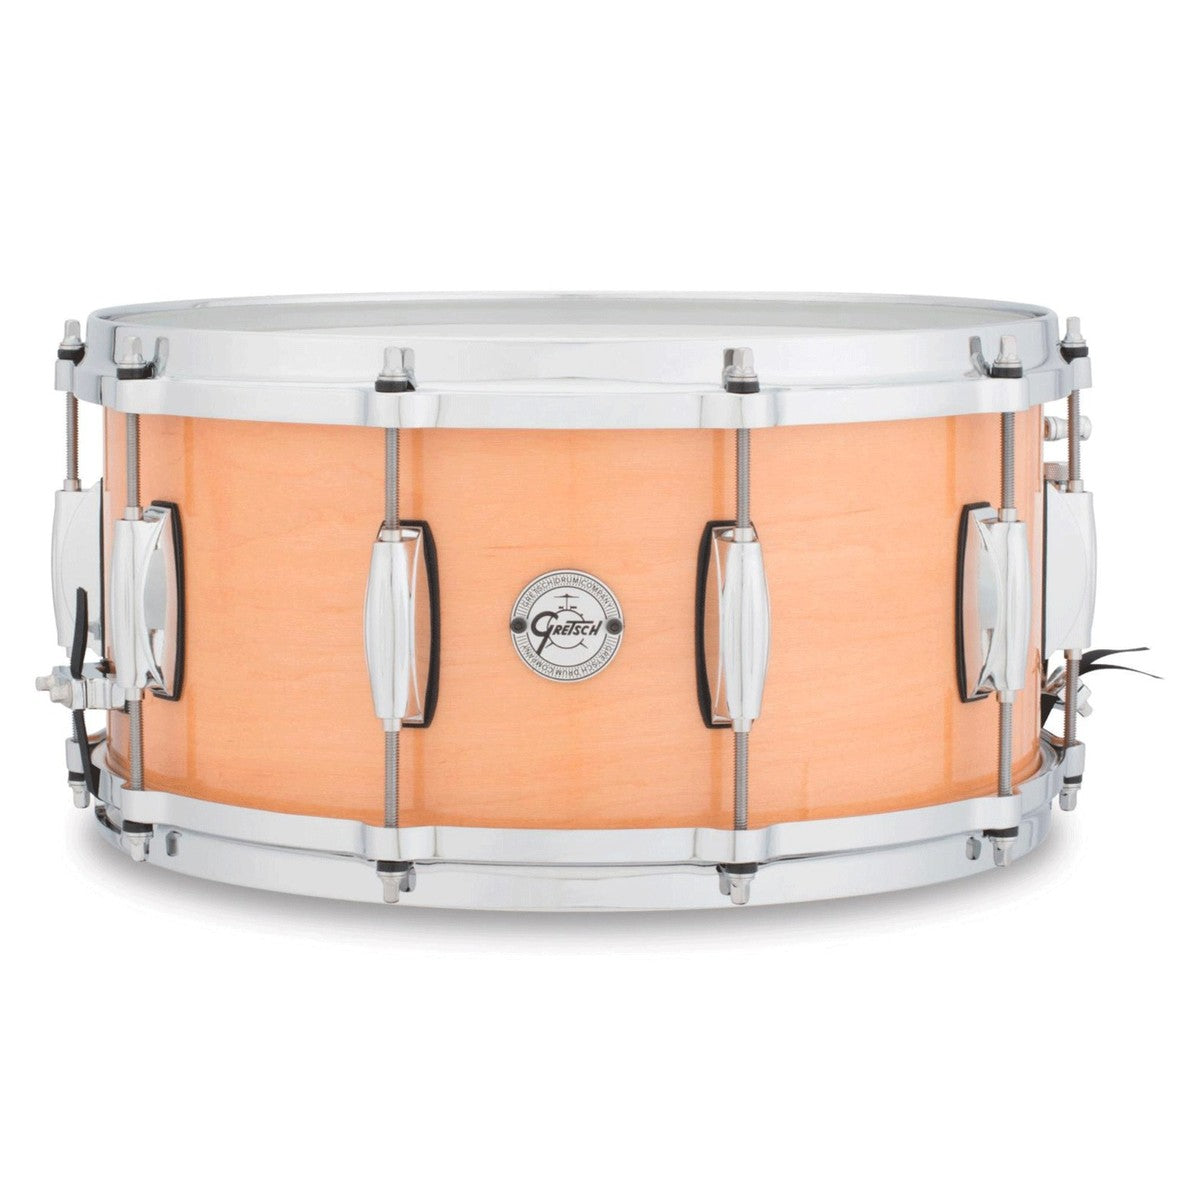 Gretsch "Full Range" 14"x6.5" Maple Snare Drum